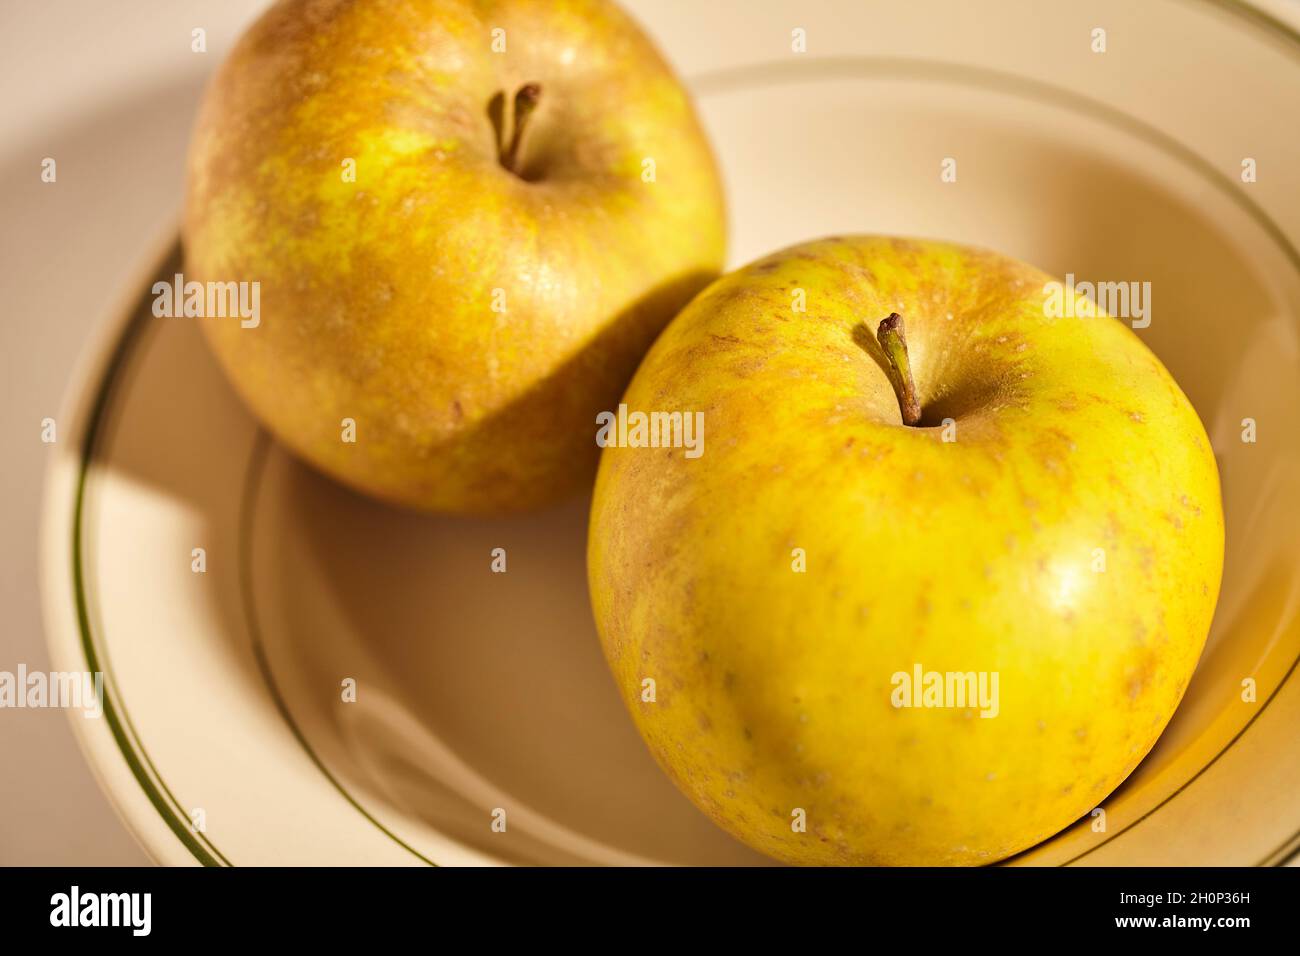 Roxbury Russet, an heirloom apple variety. Stock Photo